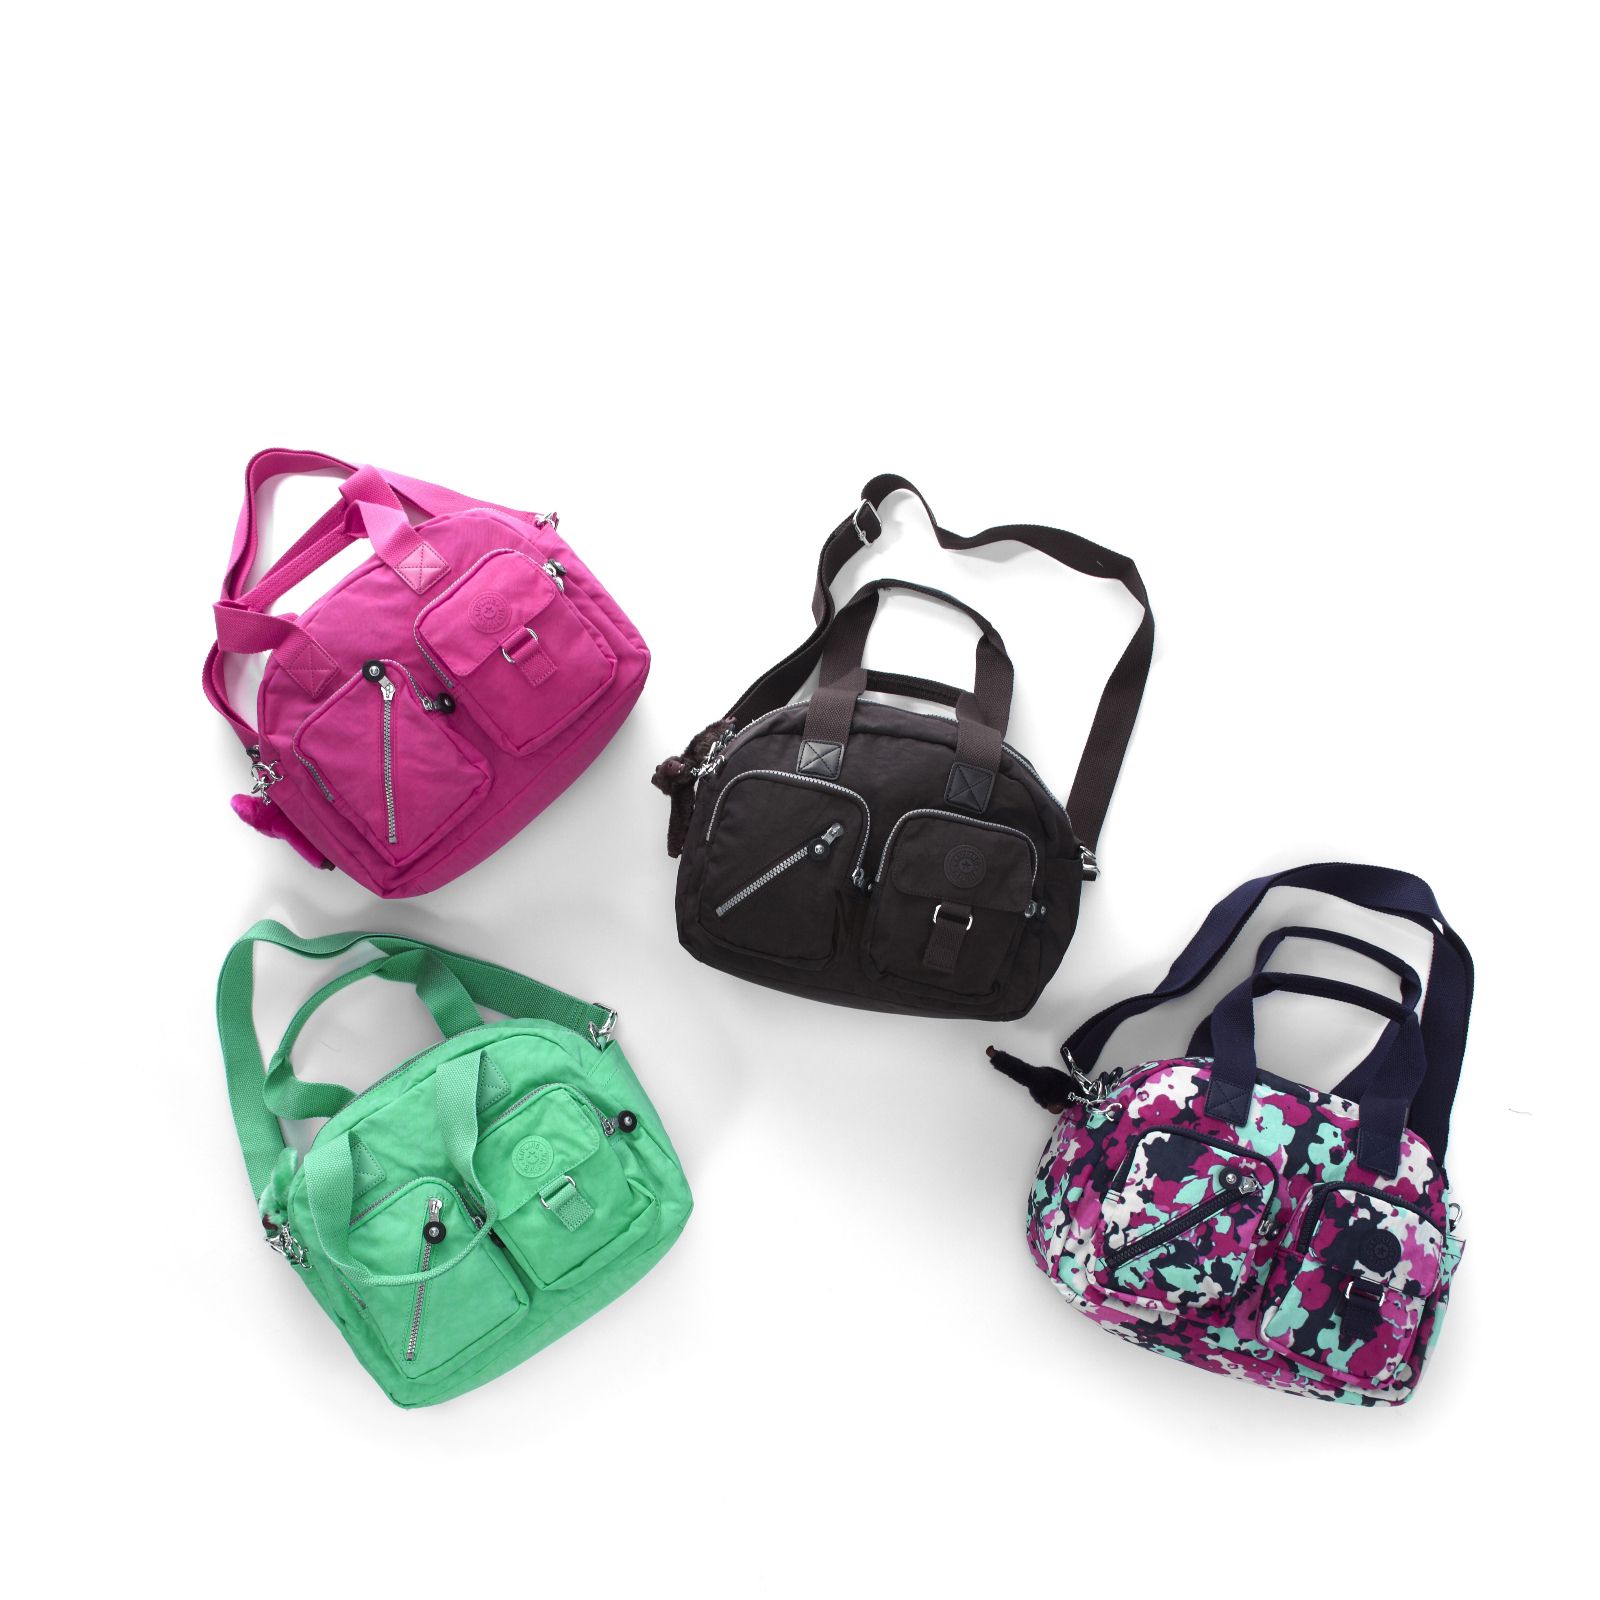 Kipling Defea Rounded Shape Handbag With Front Zip Pockets - QVC UK